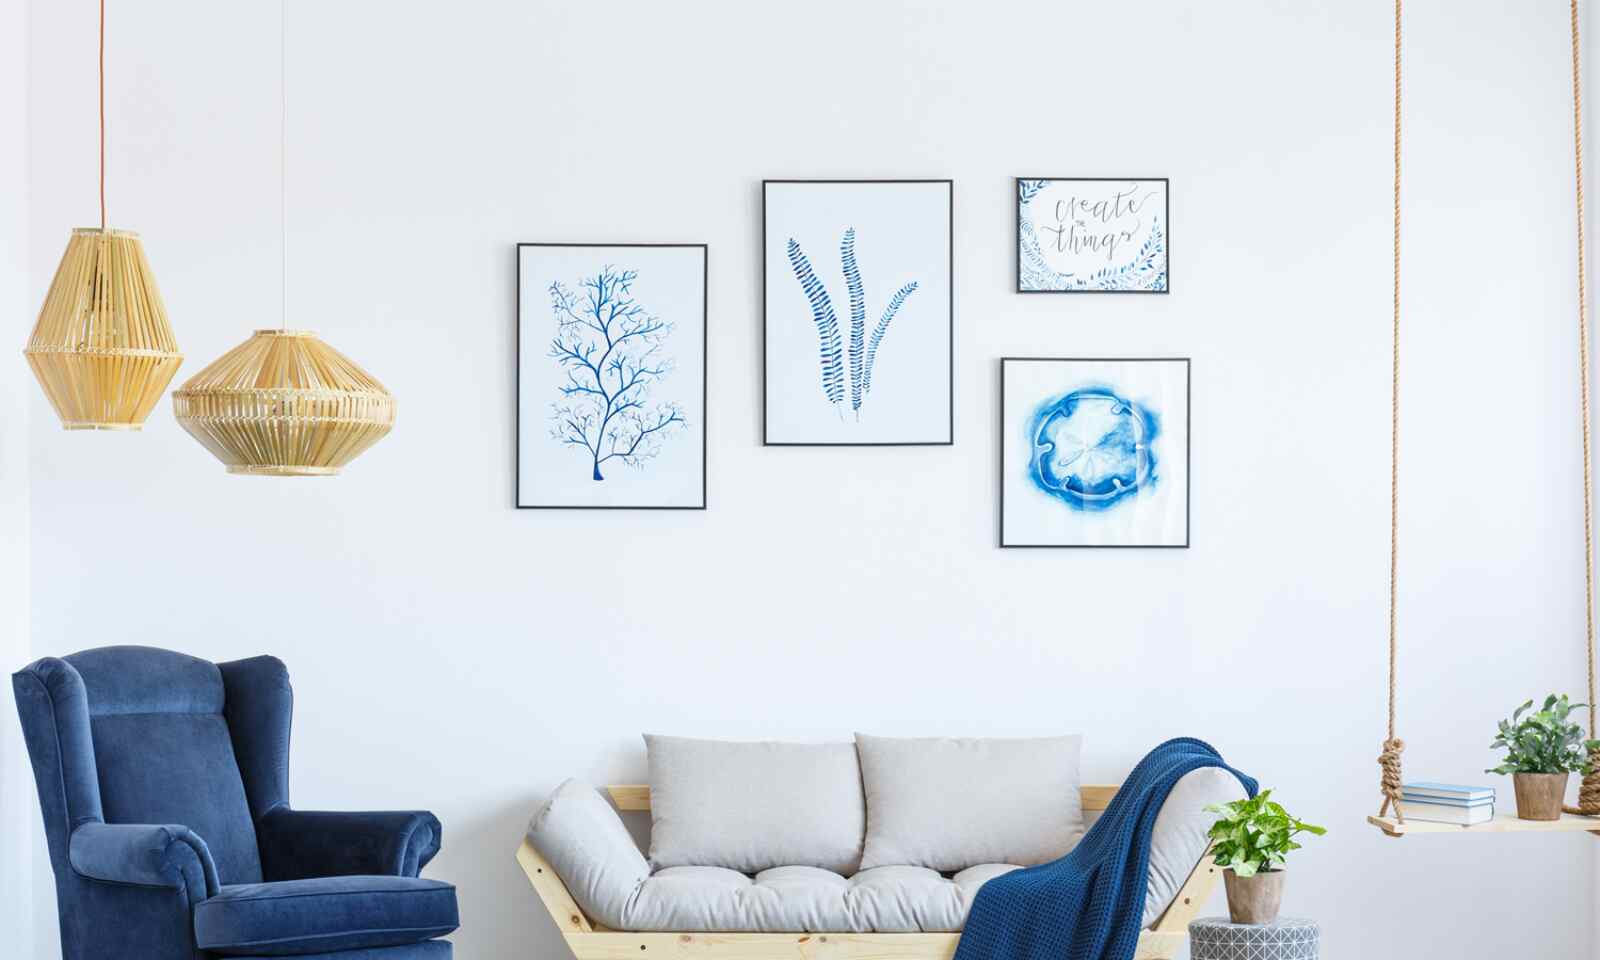 10 Trending Living Room Wall Decor Ideas